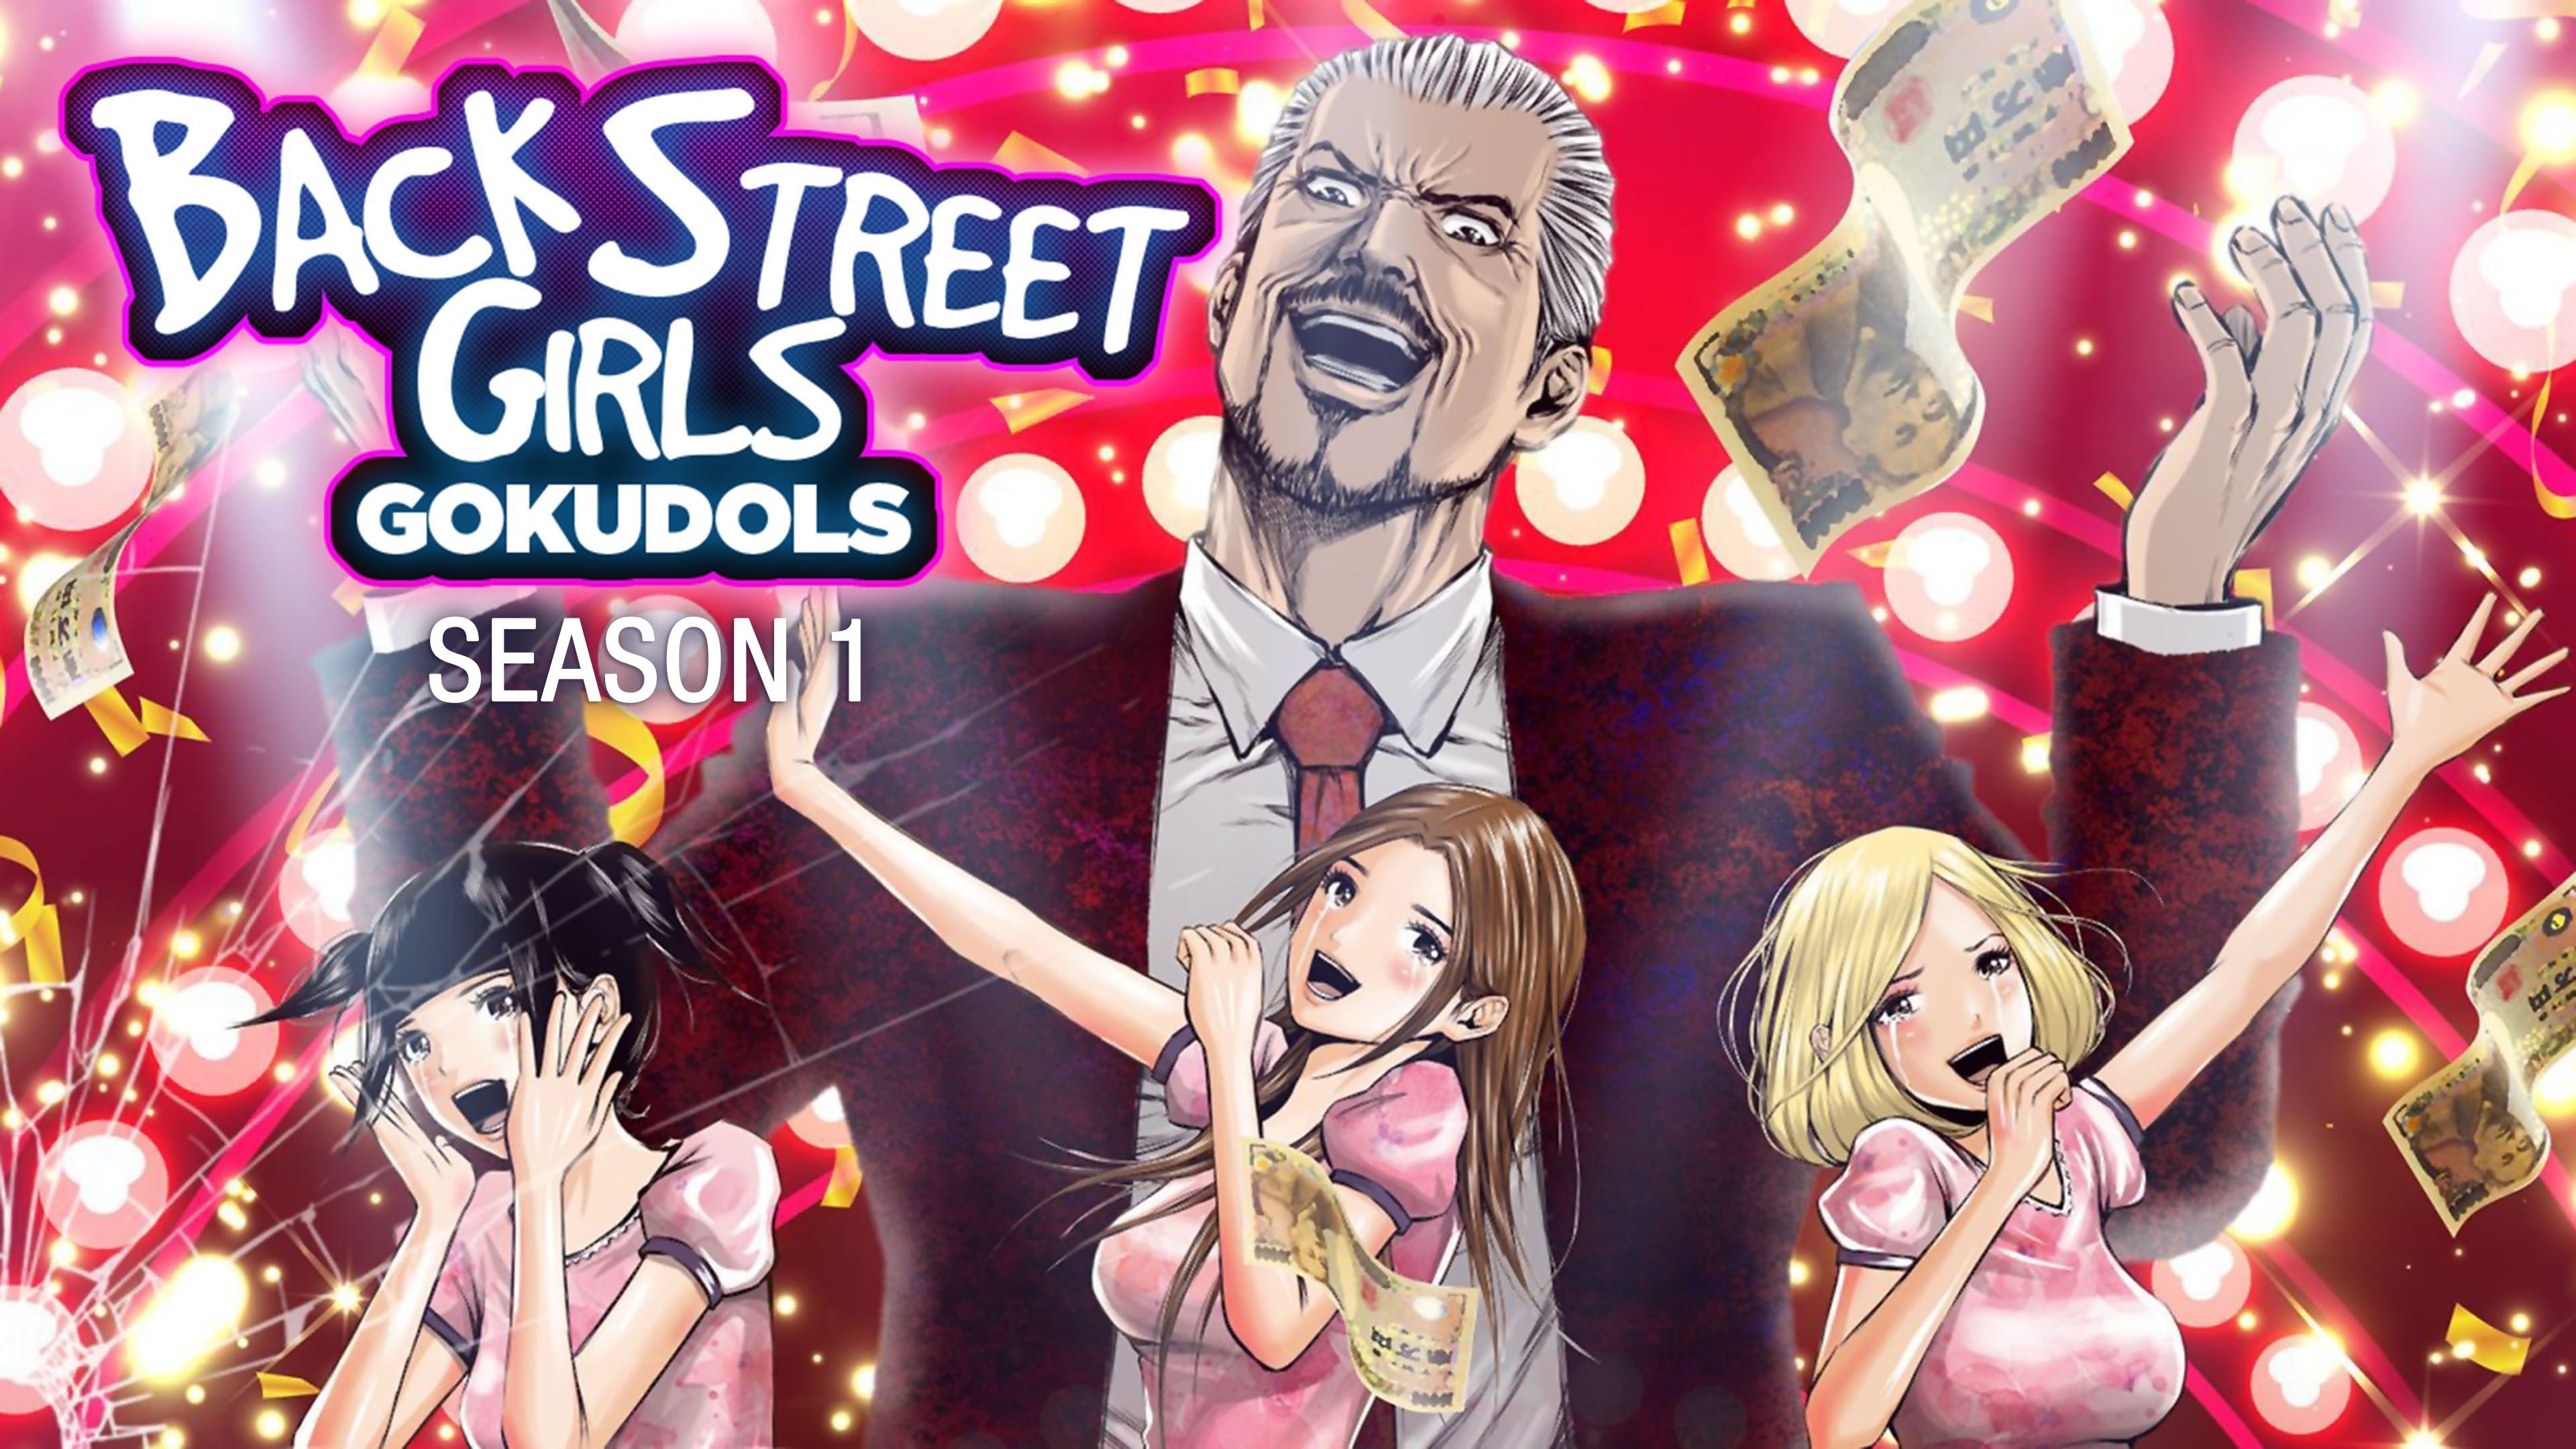 Back Street Girls: Gokudols - Rotten Tomatoes